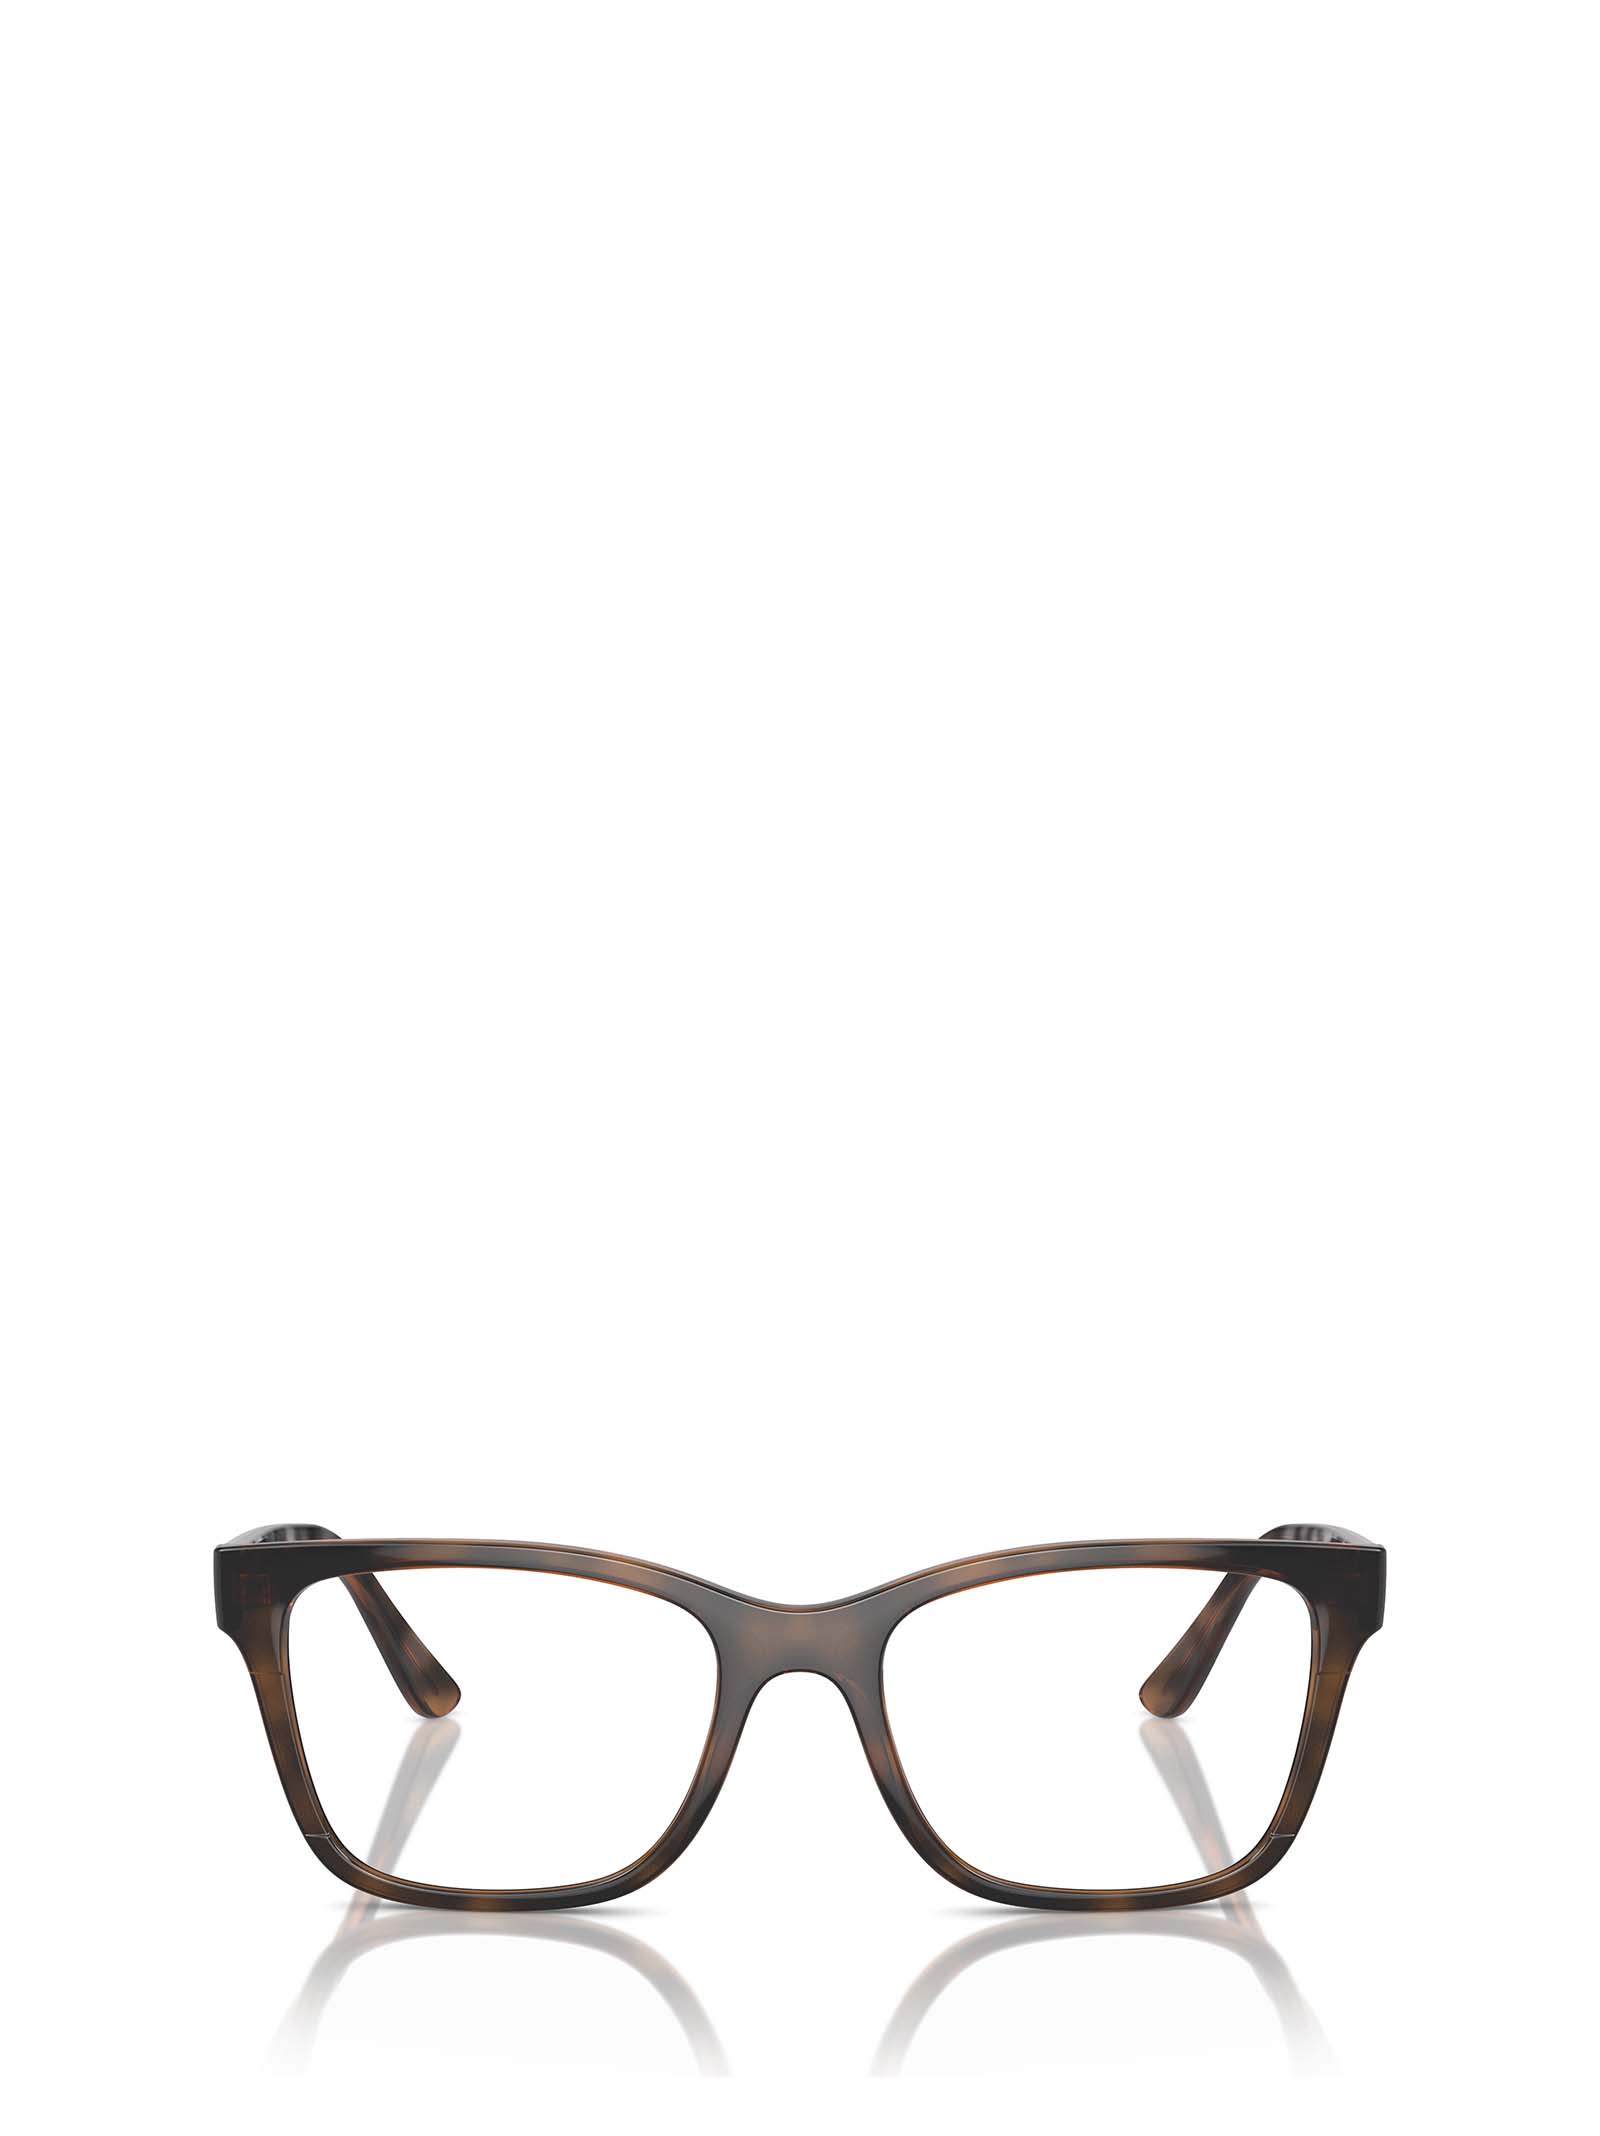 Vogue Eyewear Vo5556 Top Dark Havana / Light Brown Glasses